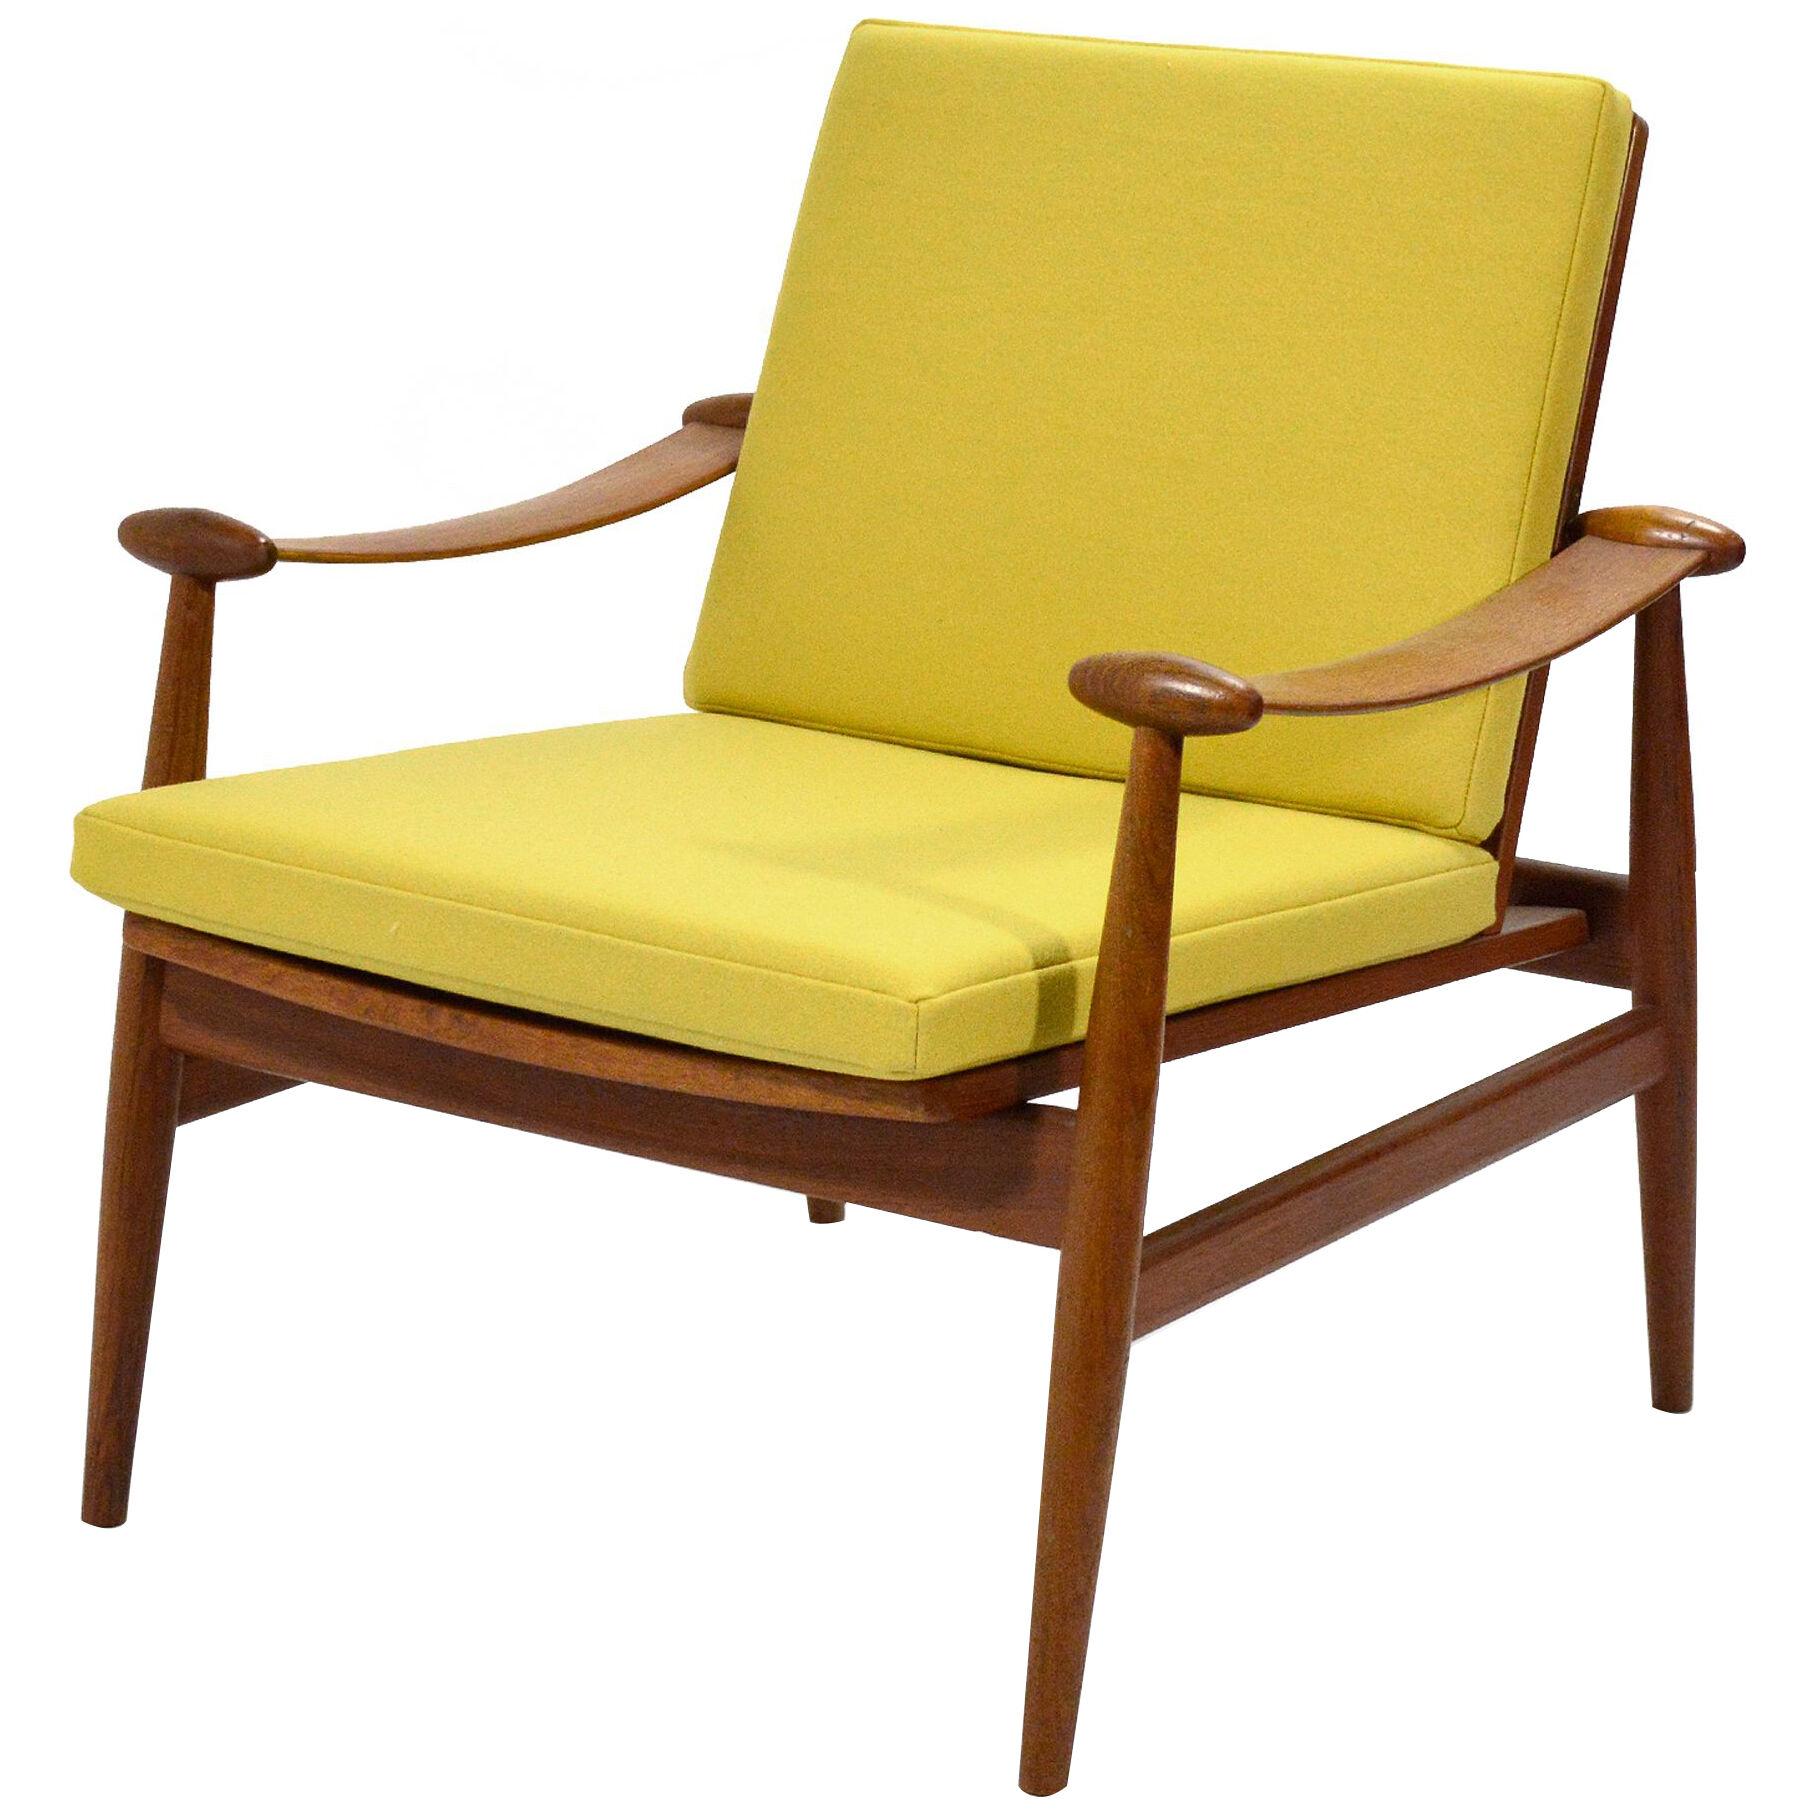 Finn Juhl Model 133 "Spade" Lounge Chair by France & Daverkosen